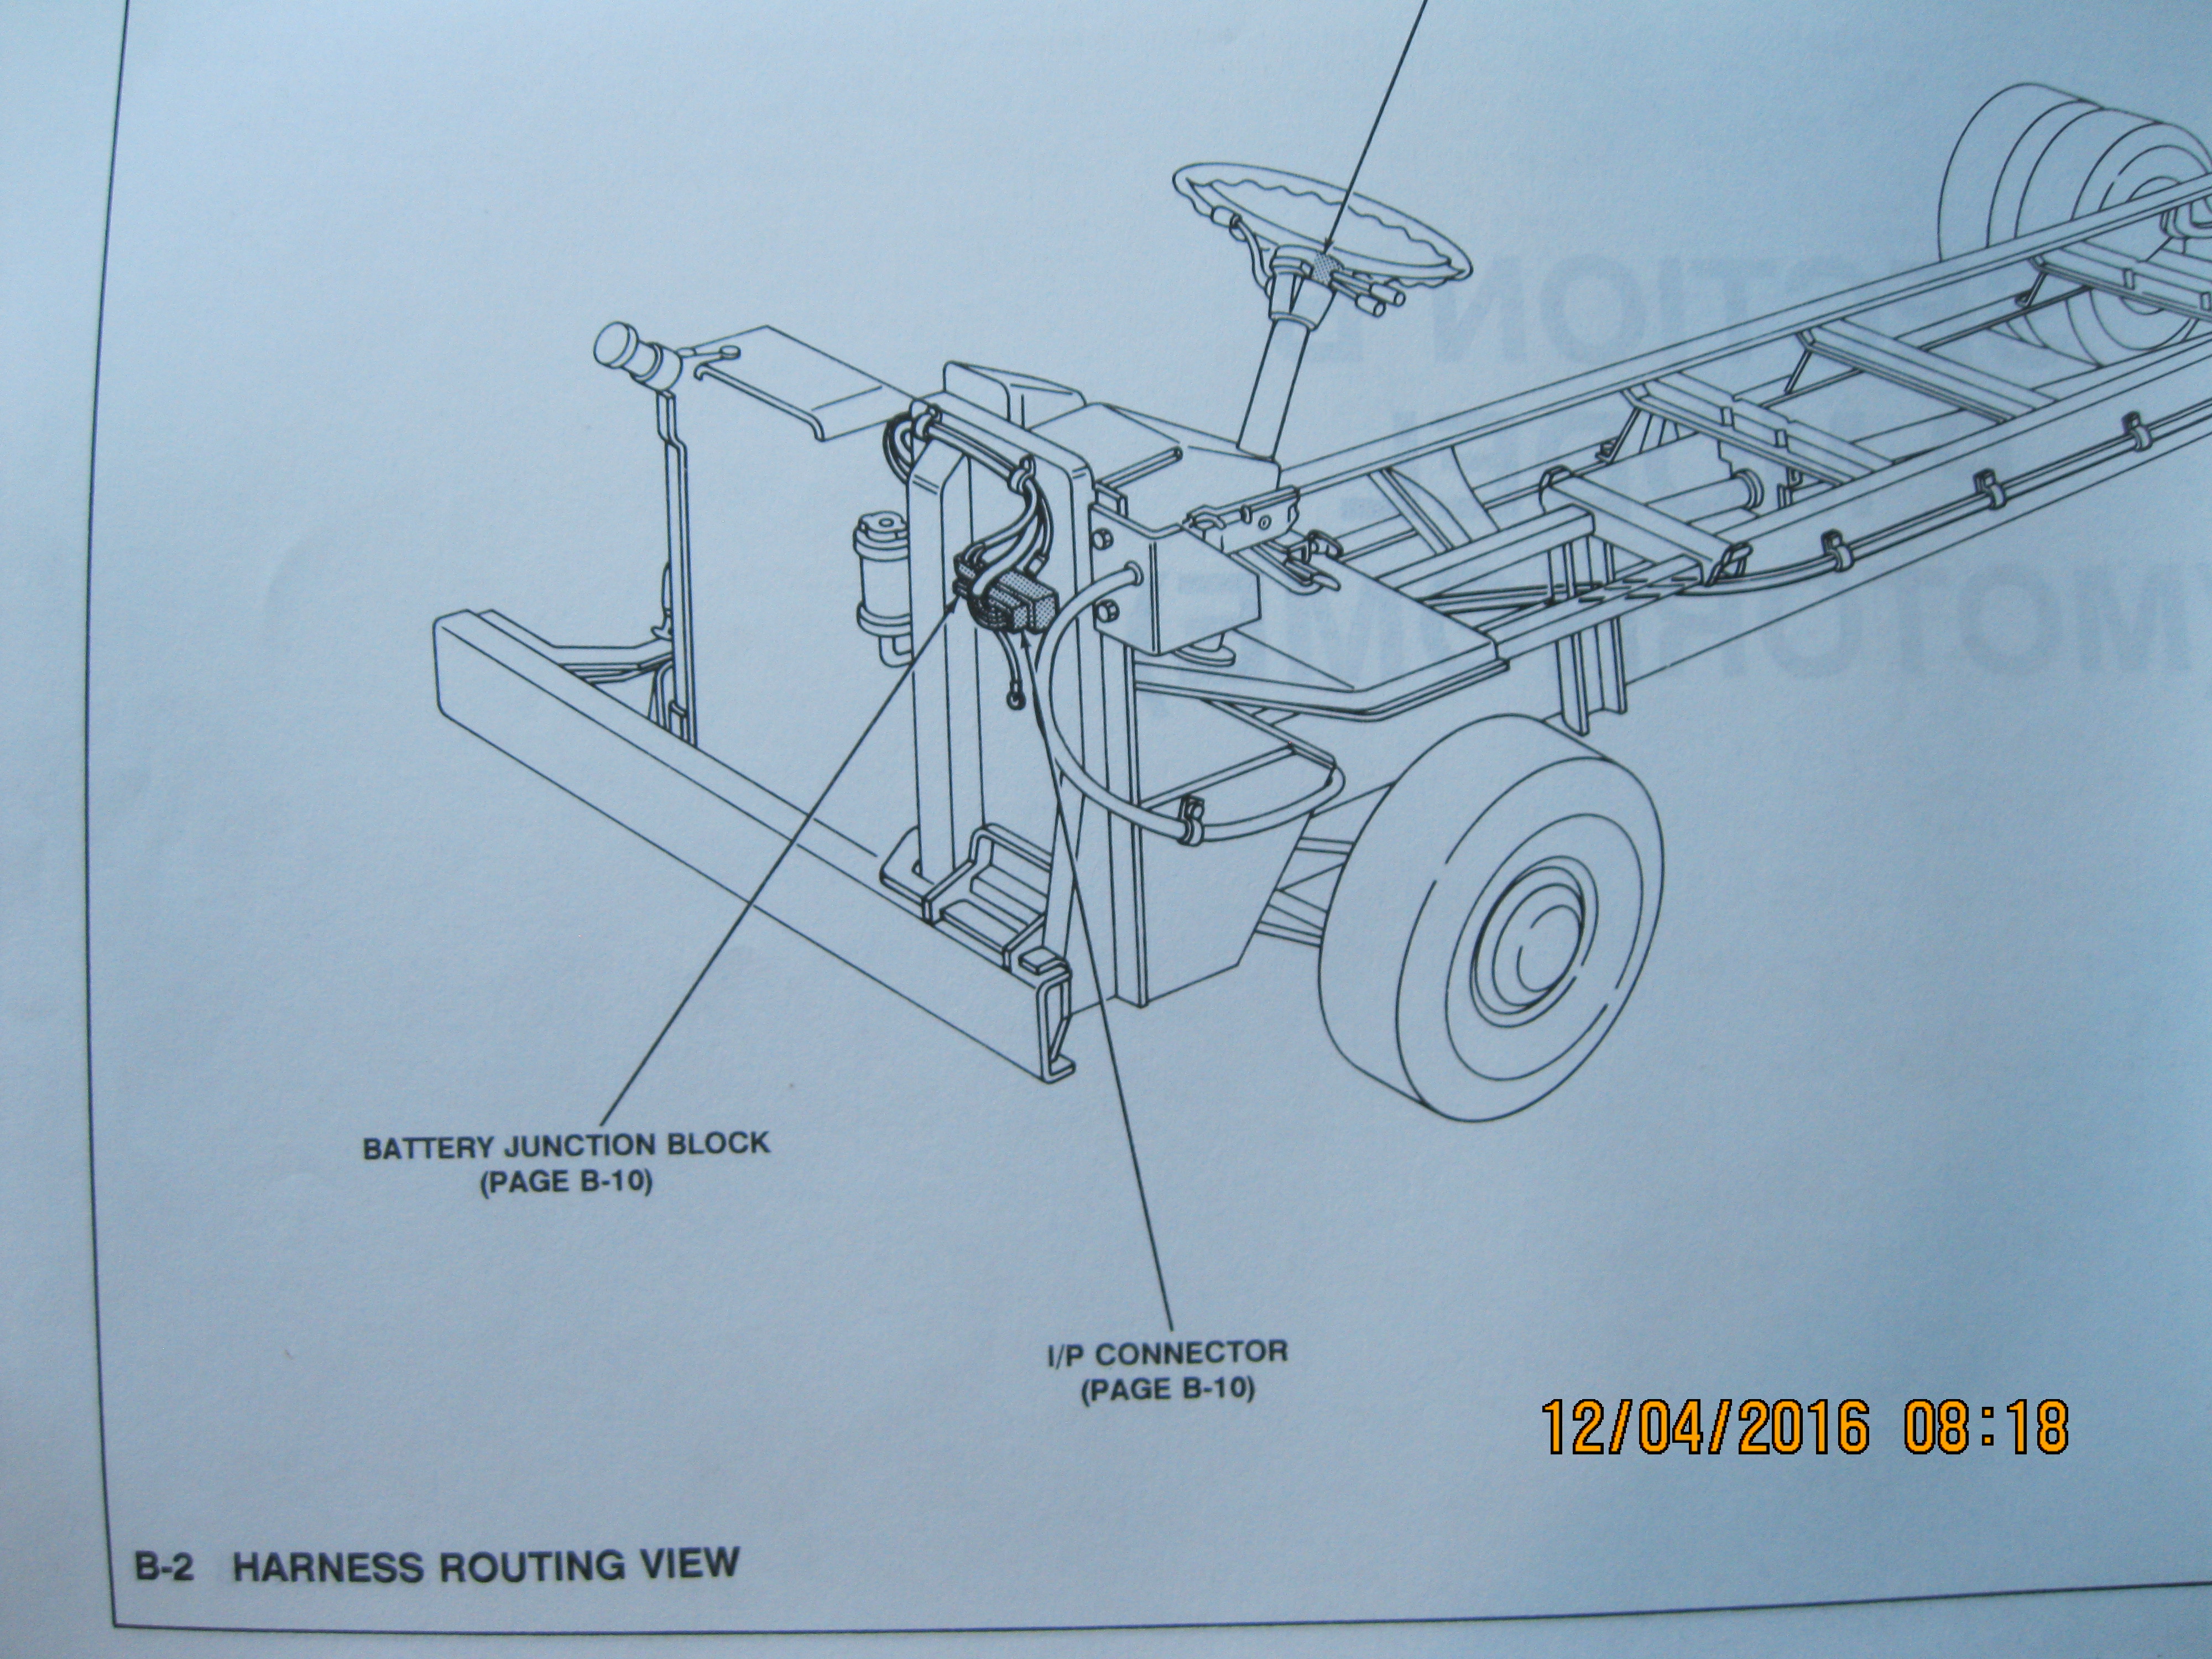 1990 southwind motorhome wiring diagram